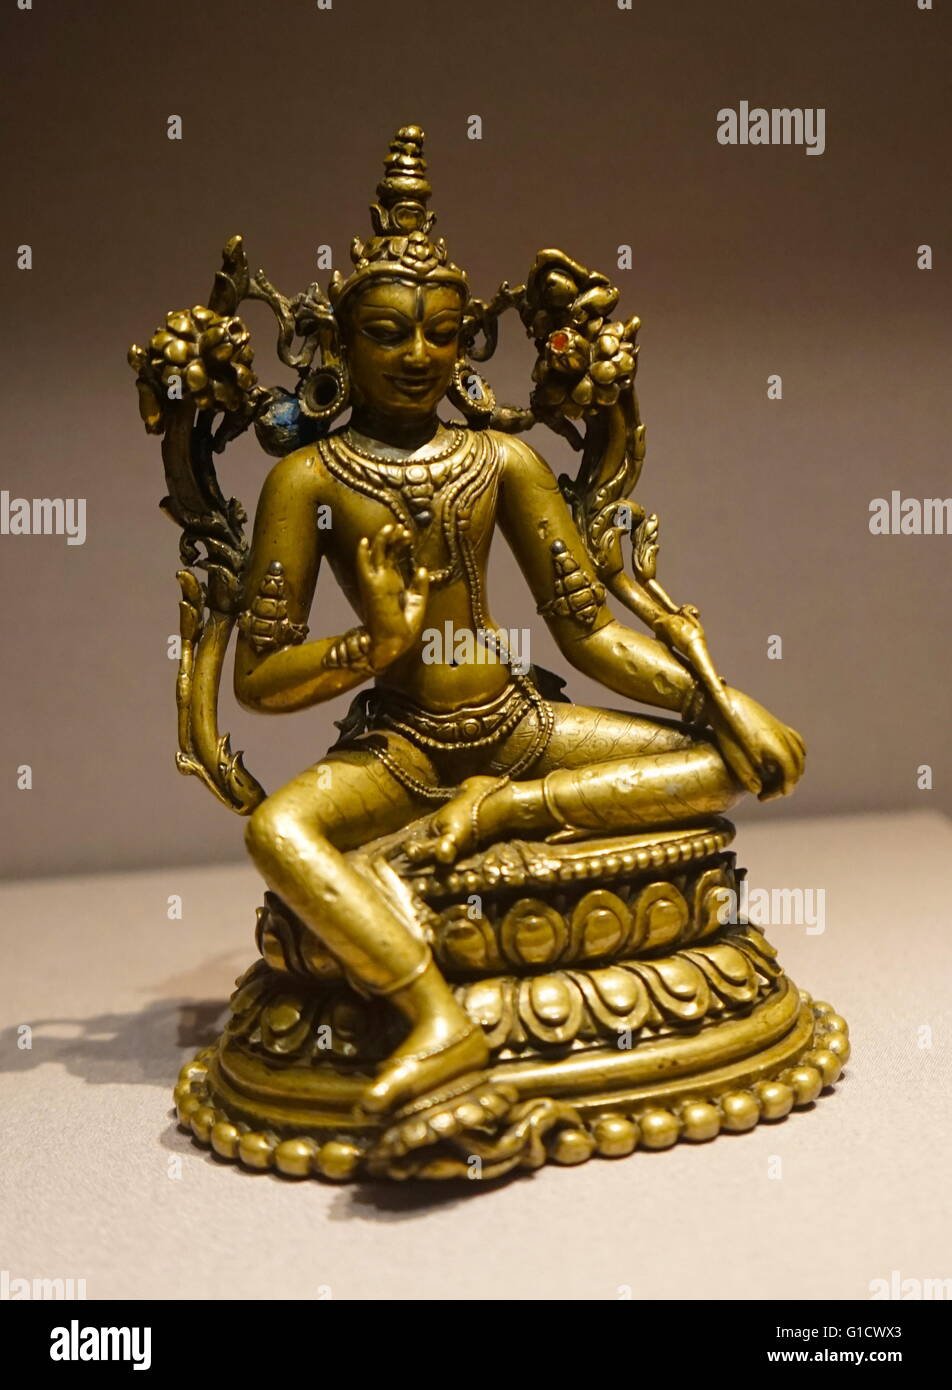 Il bronzo figure sedute di Avalokiteshvara, la manifestazione terrena dell'auto-data di nascita eterna Buddha Amitabha. Datato xii secolo Foto Stock